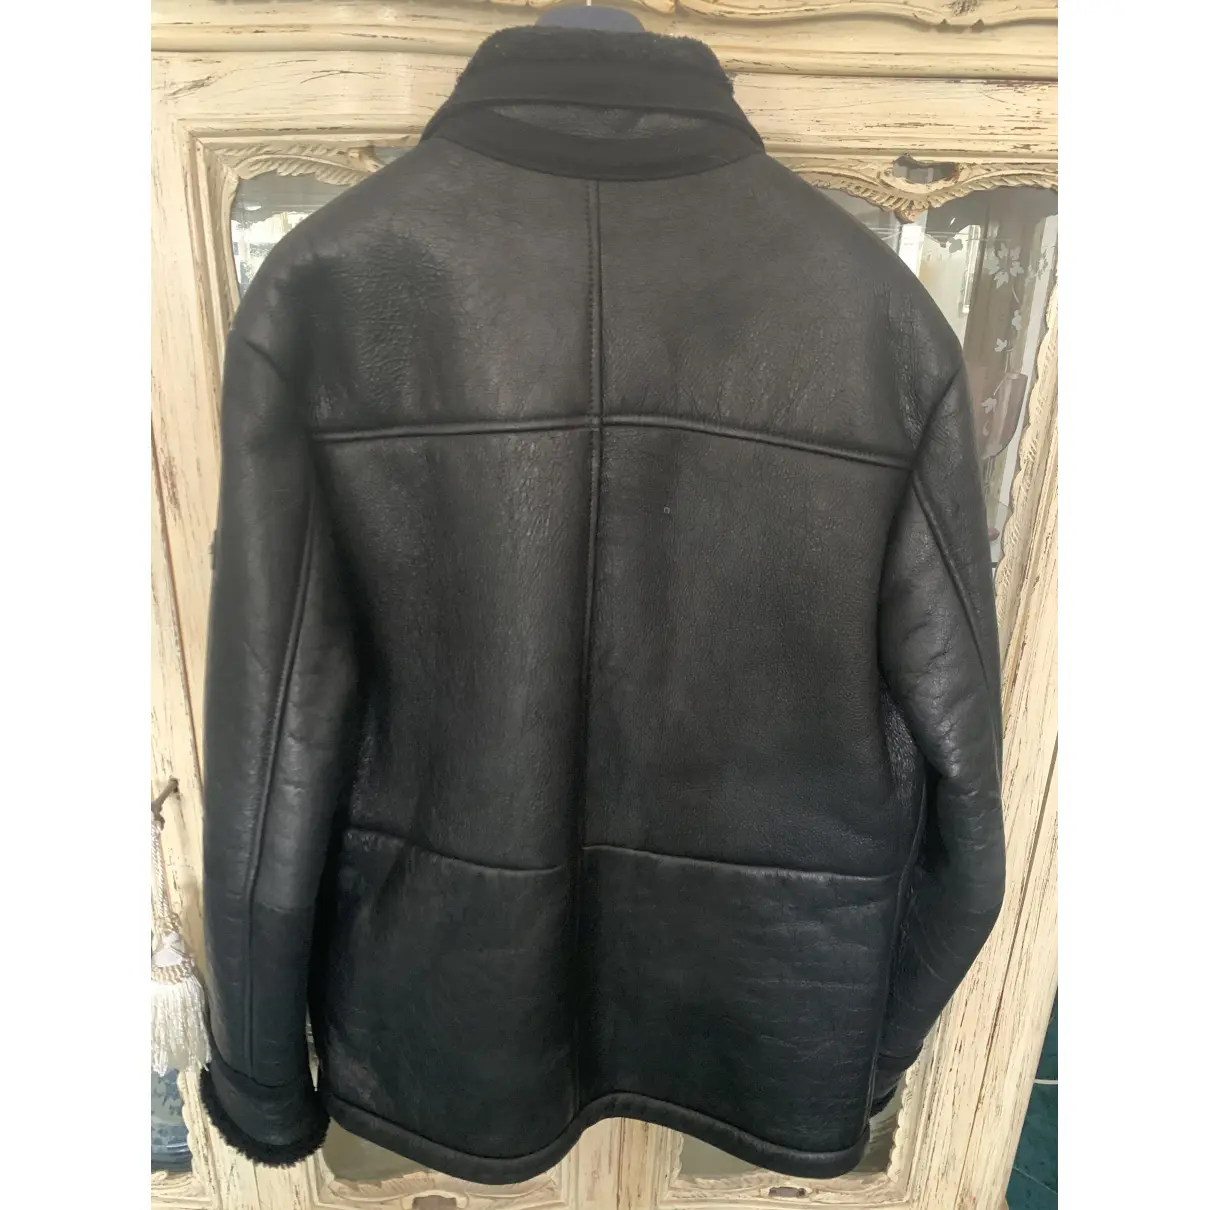 Buy Gianfranco Ferré Leather jacket online